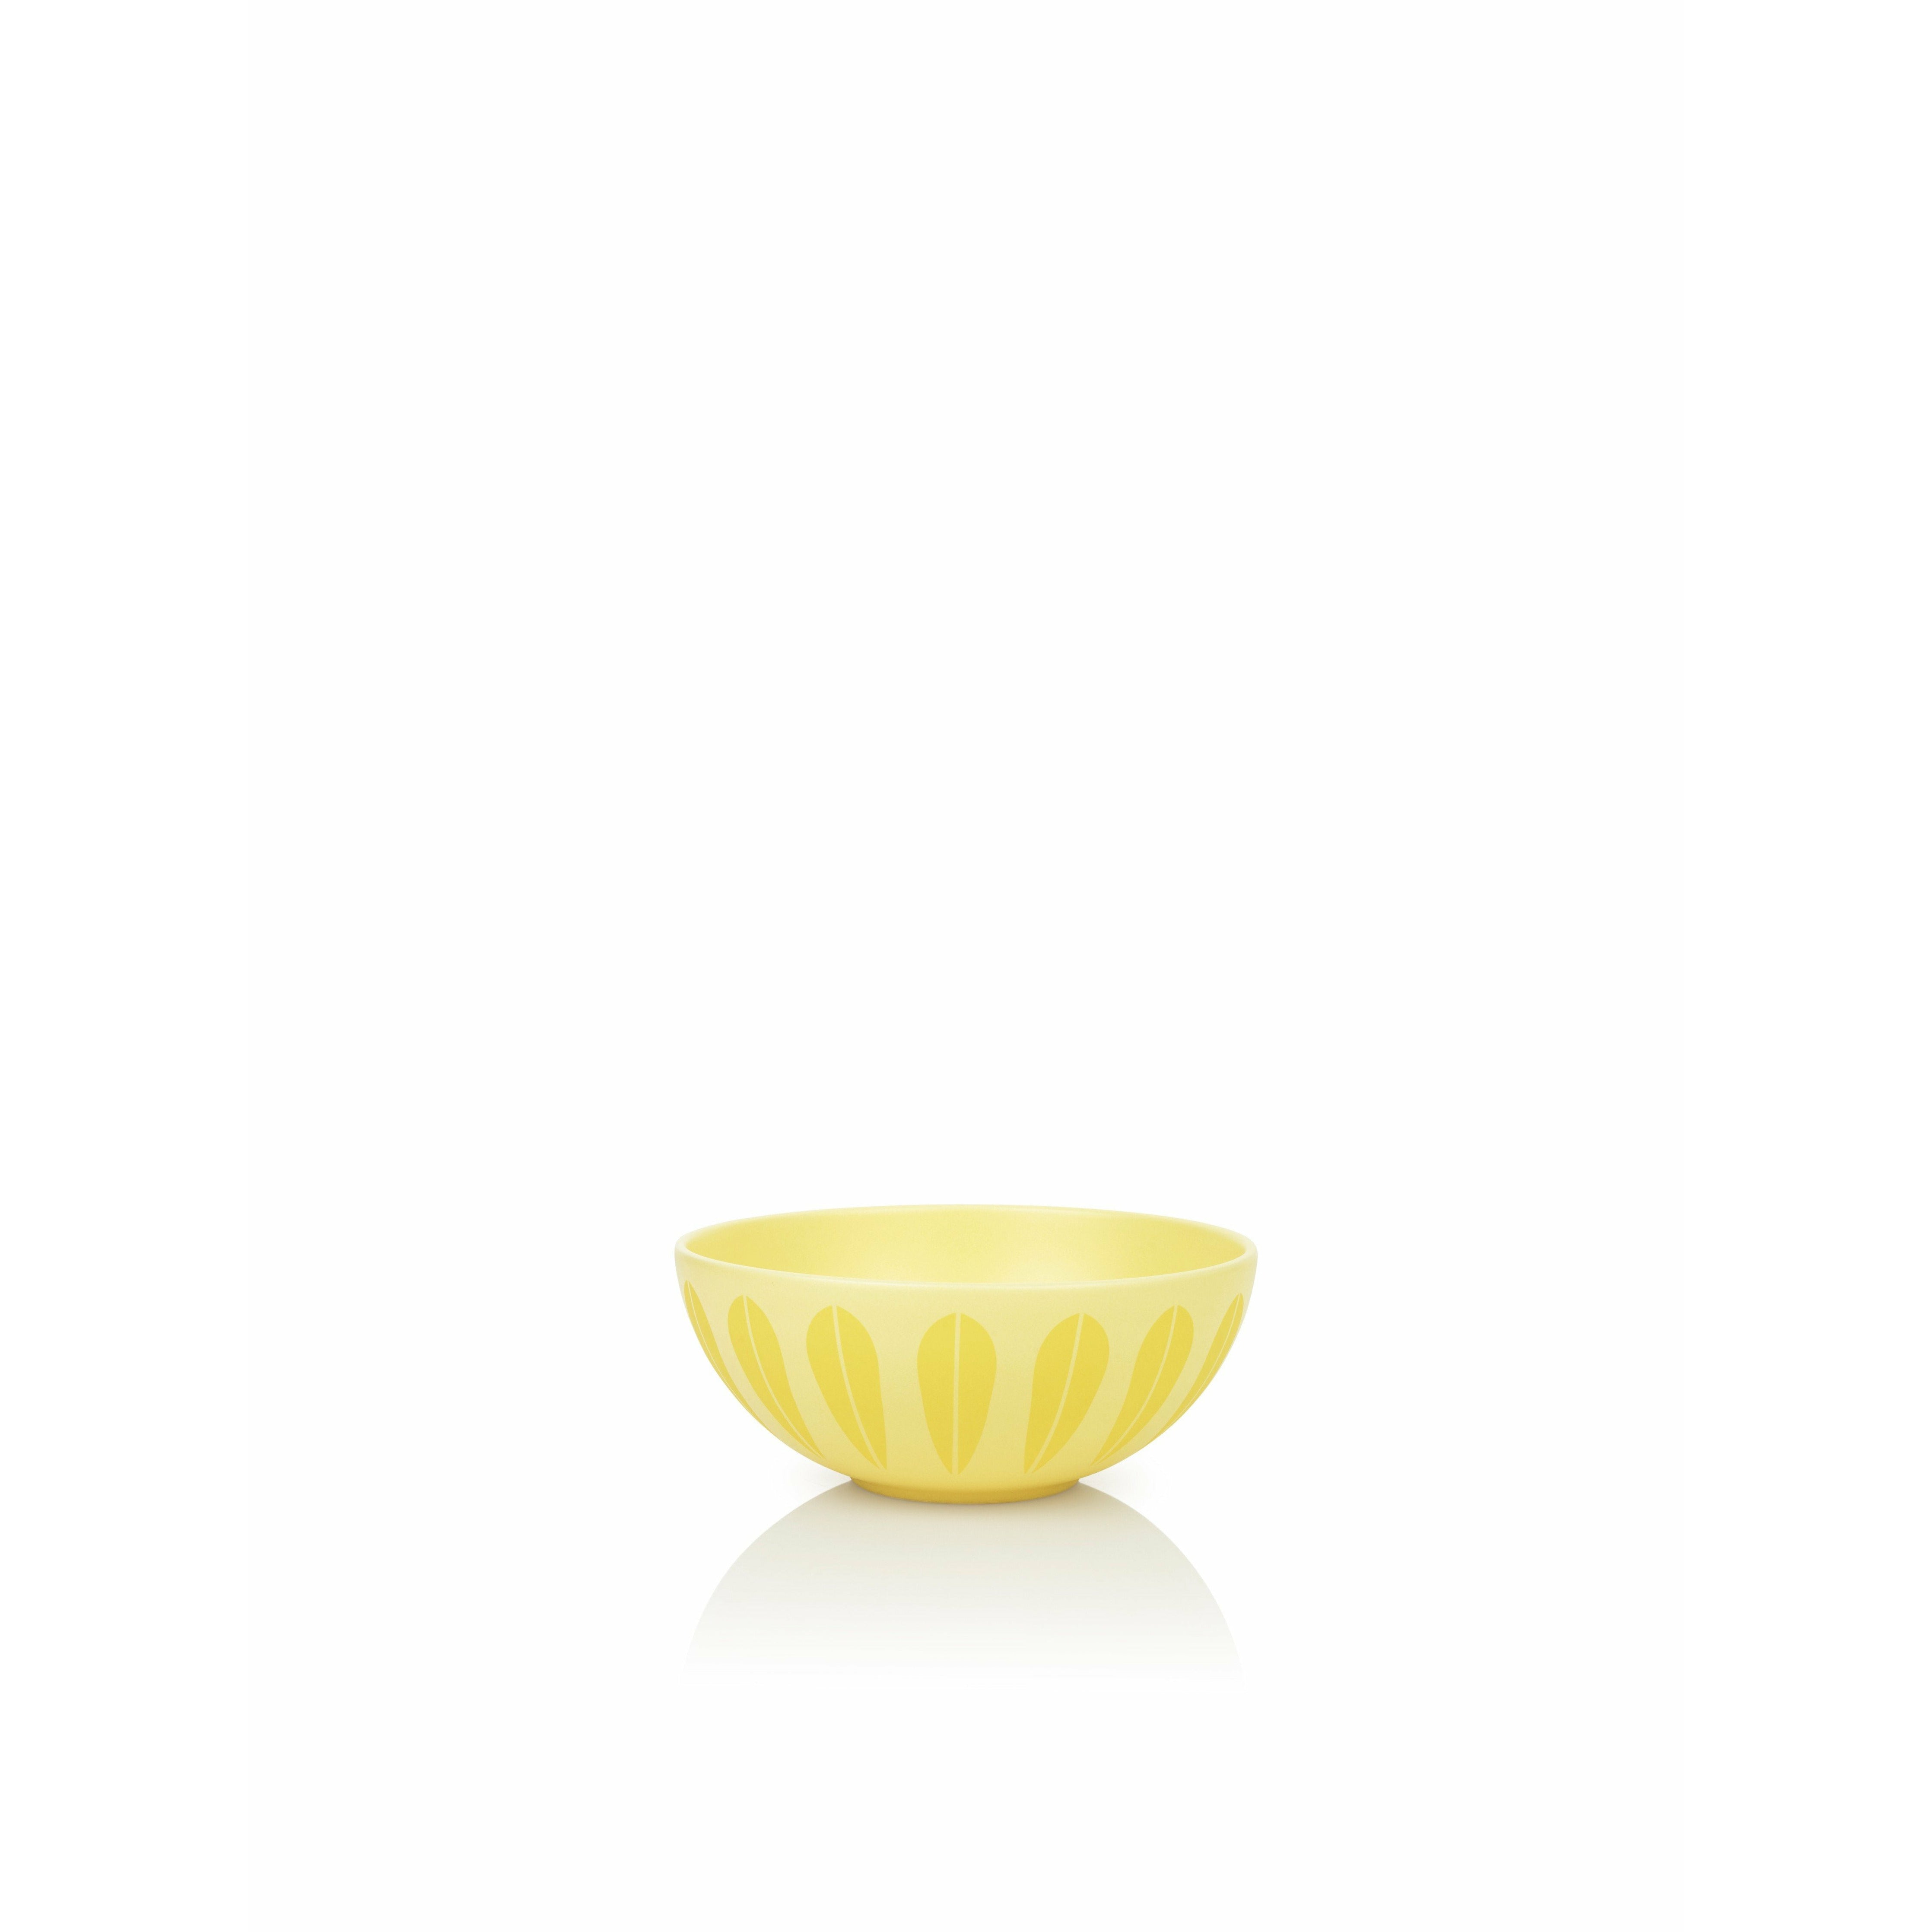 Lucie Kaas Arne Clausen Lotus Bowl amarillo, Ø18 cm